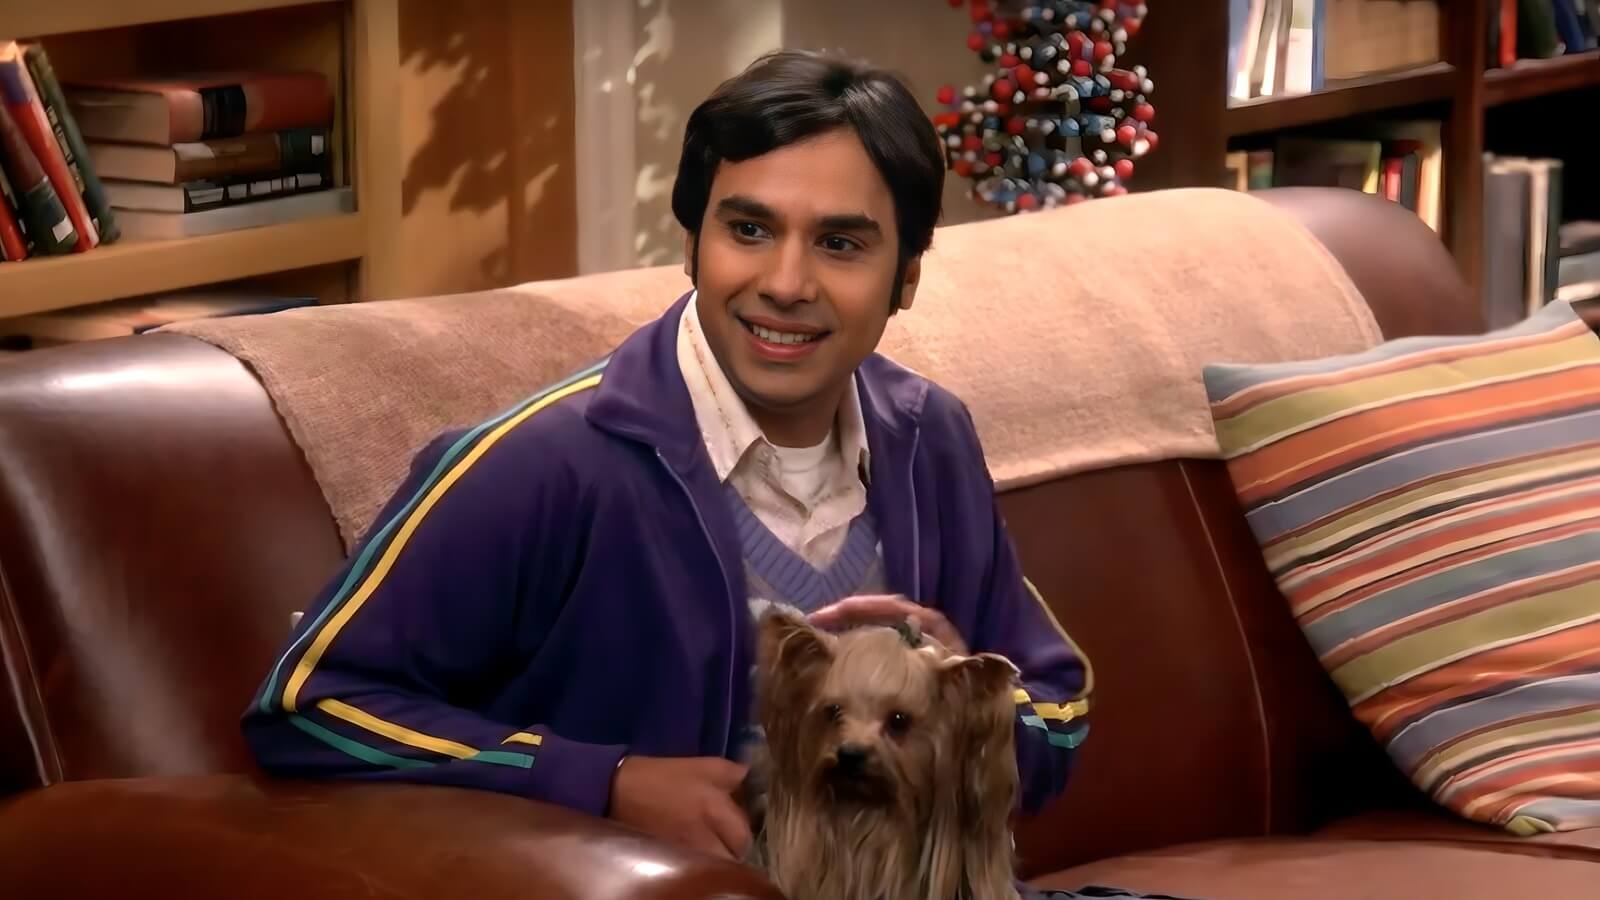 Raj from the TV series The Big Bang Theory with his dog Cinnamon.